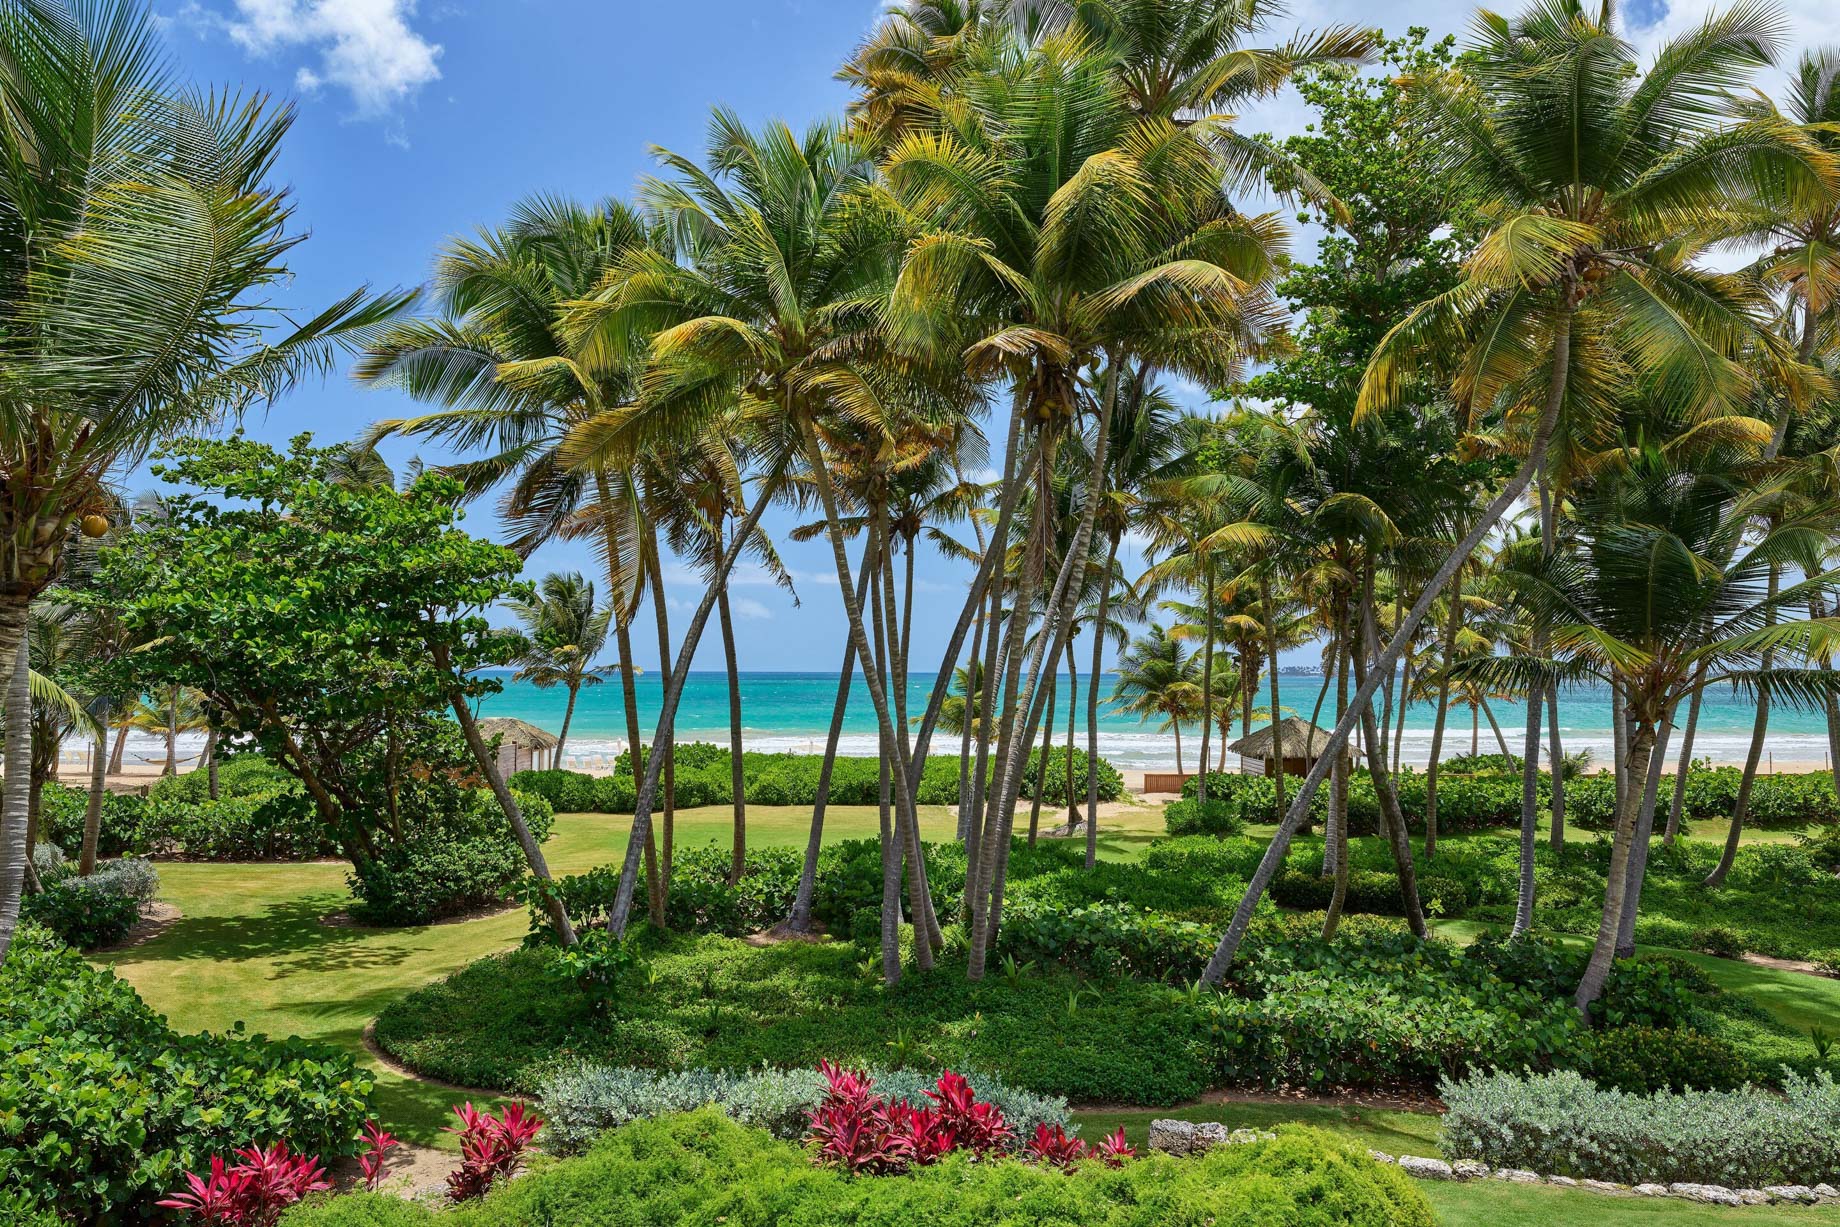 The St. Regis Bahia Beach Resort – Rio Grande, Puerto Rico – Ocean Front Guest Room View